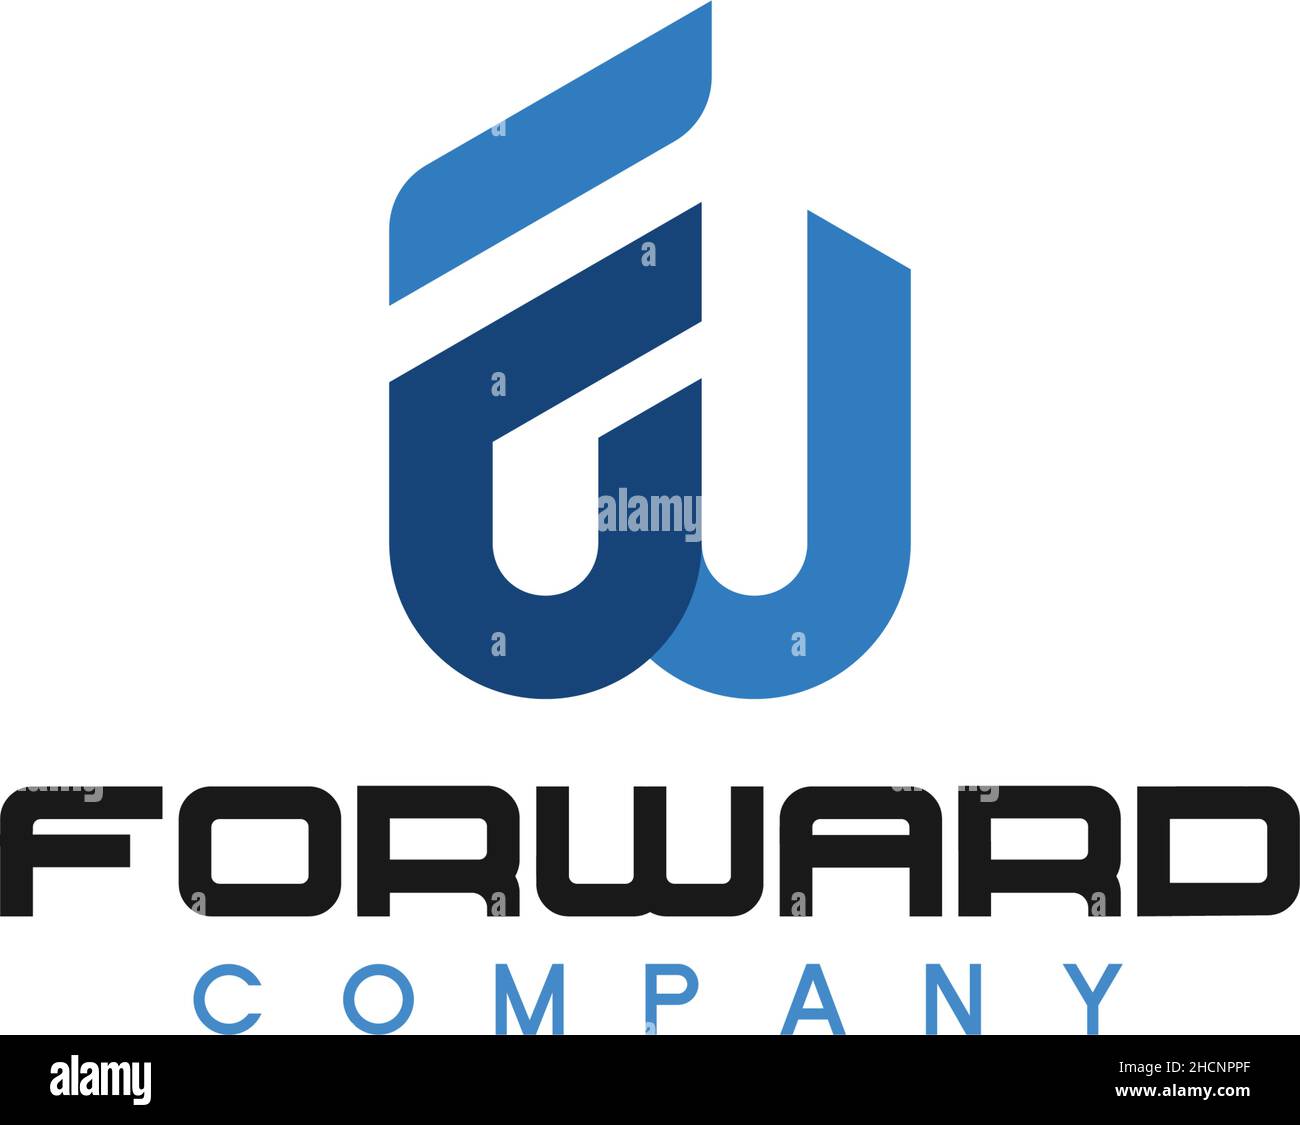 Flat letter simple FORWARD COMPANY logo design Stock Vector